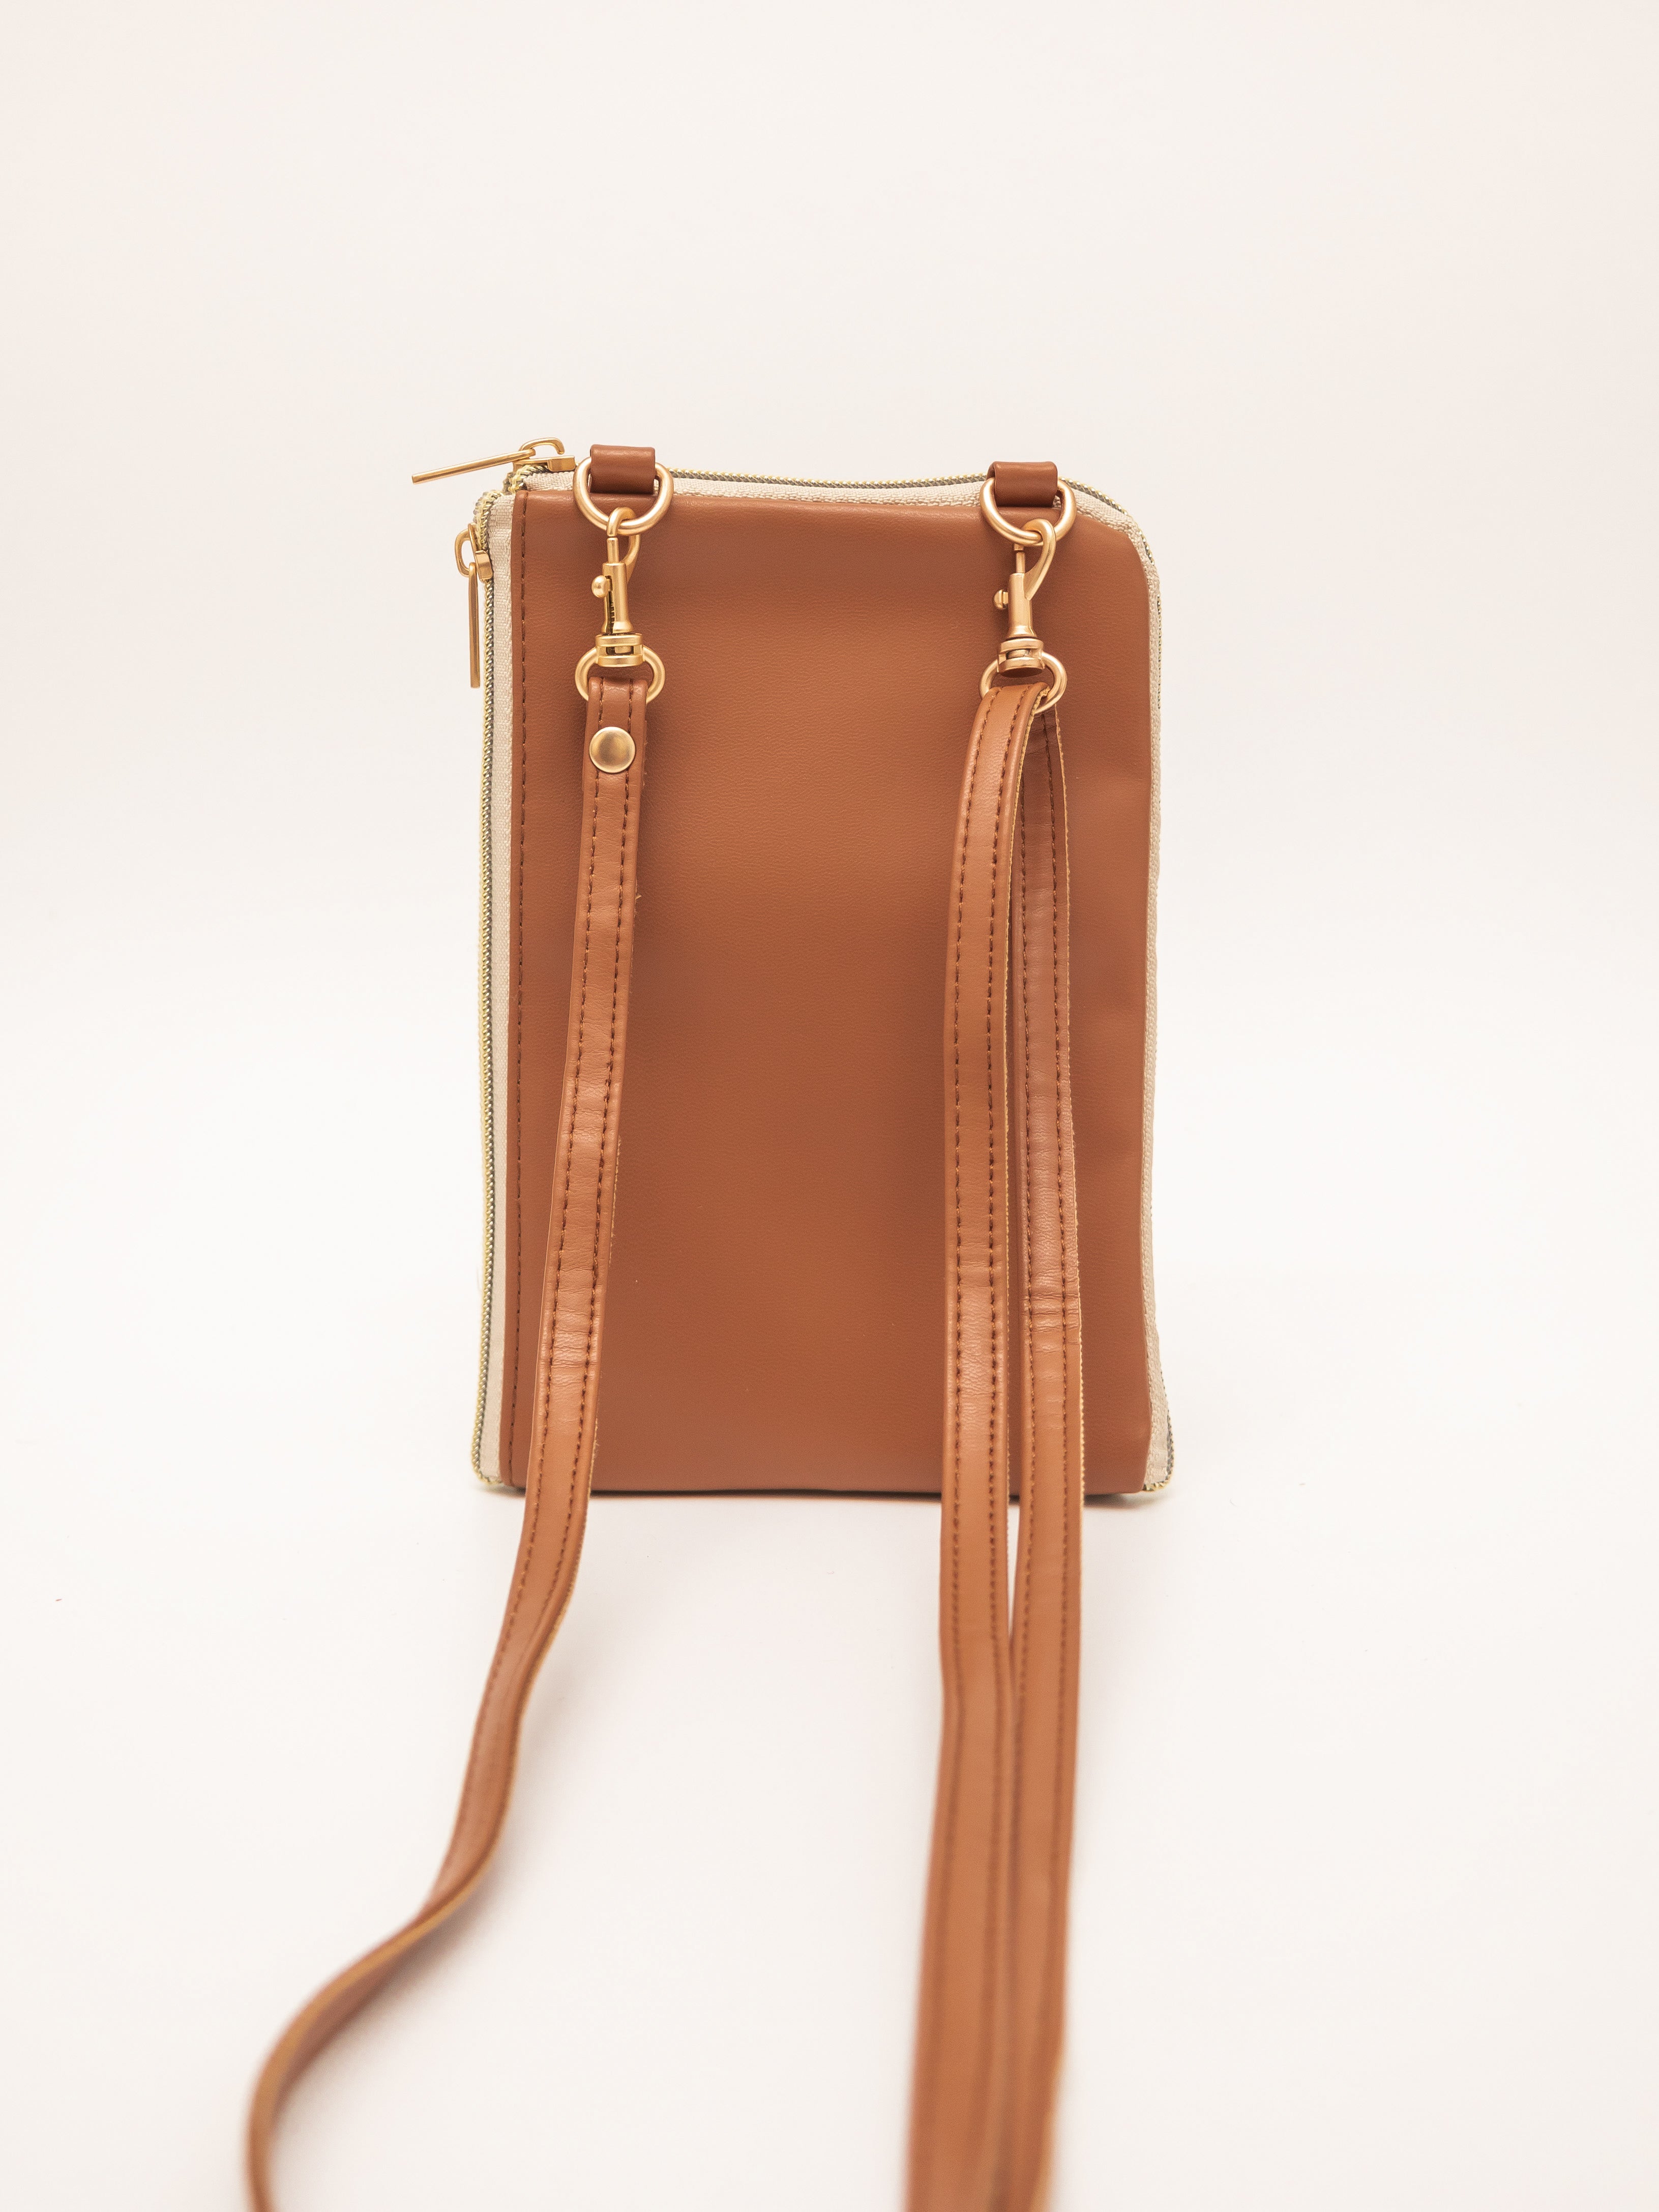 Nude Camel Leather Dual Zip Sling Bag 2.0